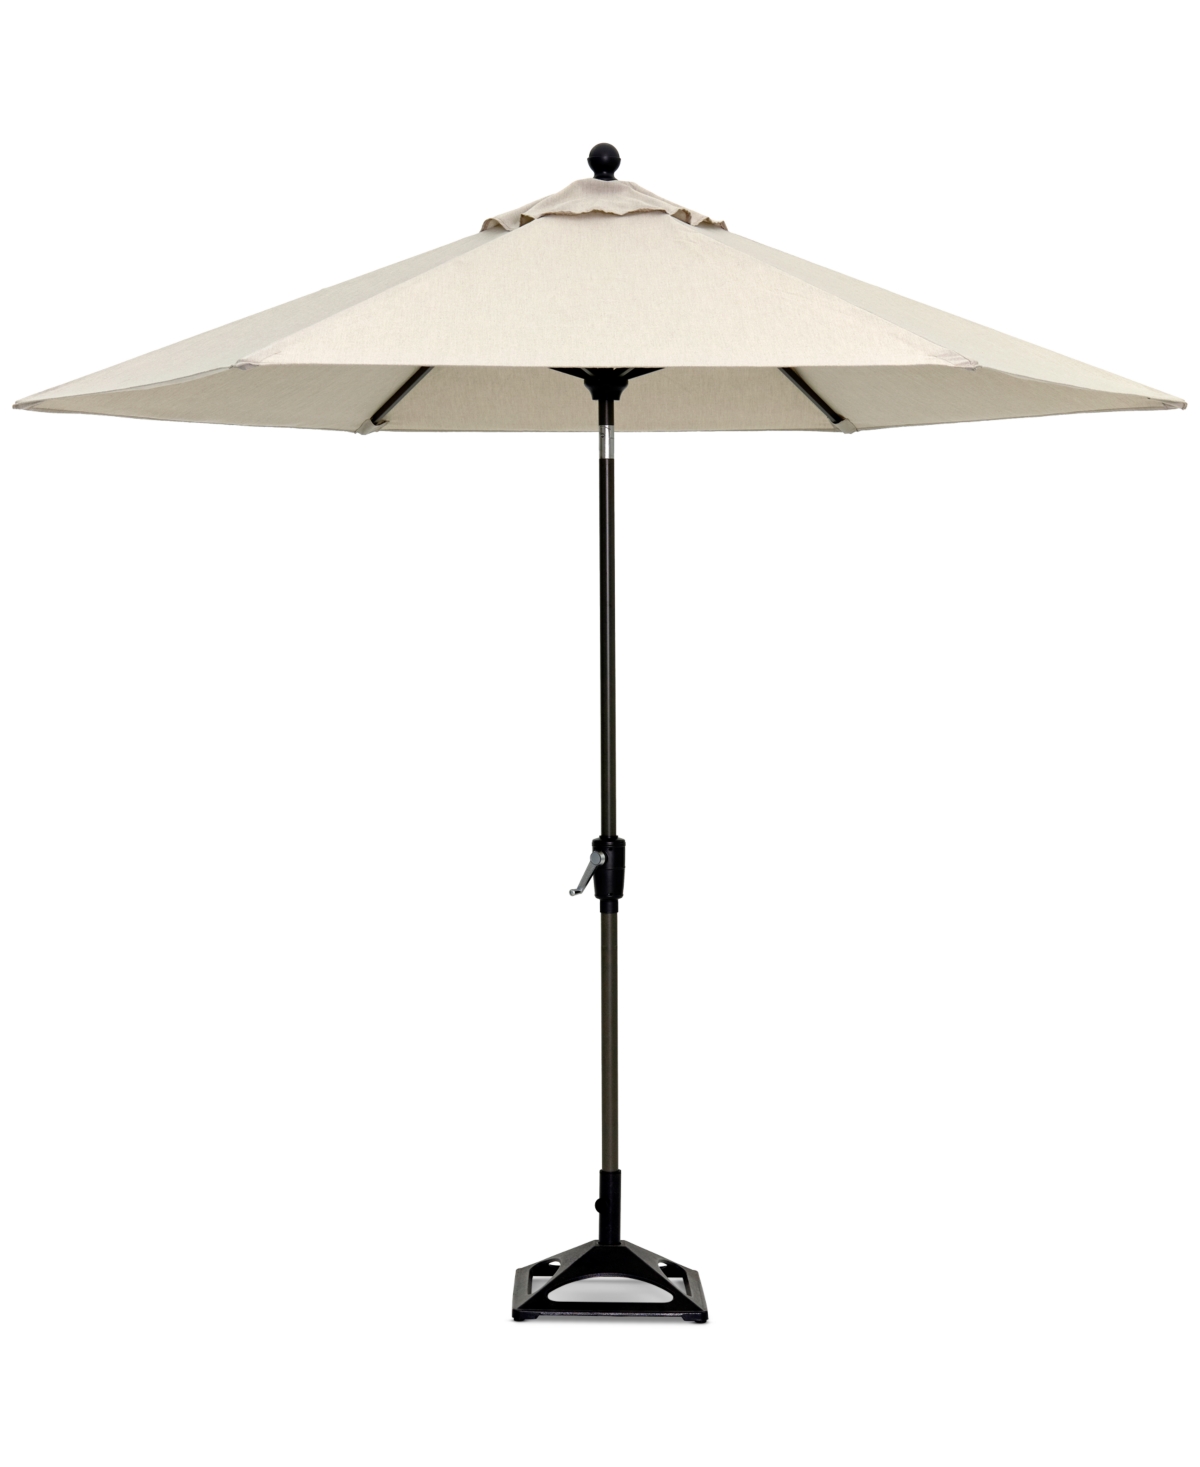 Agio Avanti Outdoor 9' Auto-tilt Umbrella In Outdura Remy Cloud